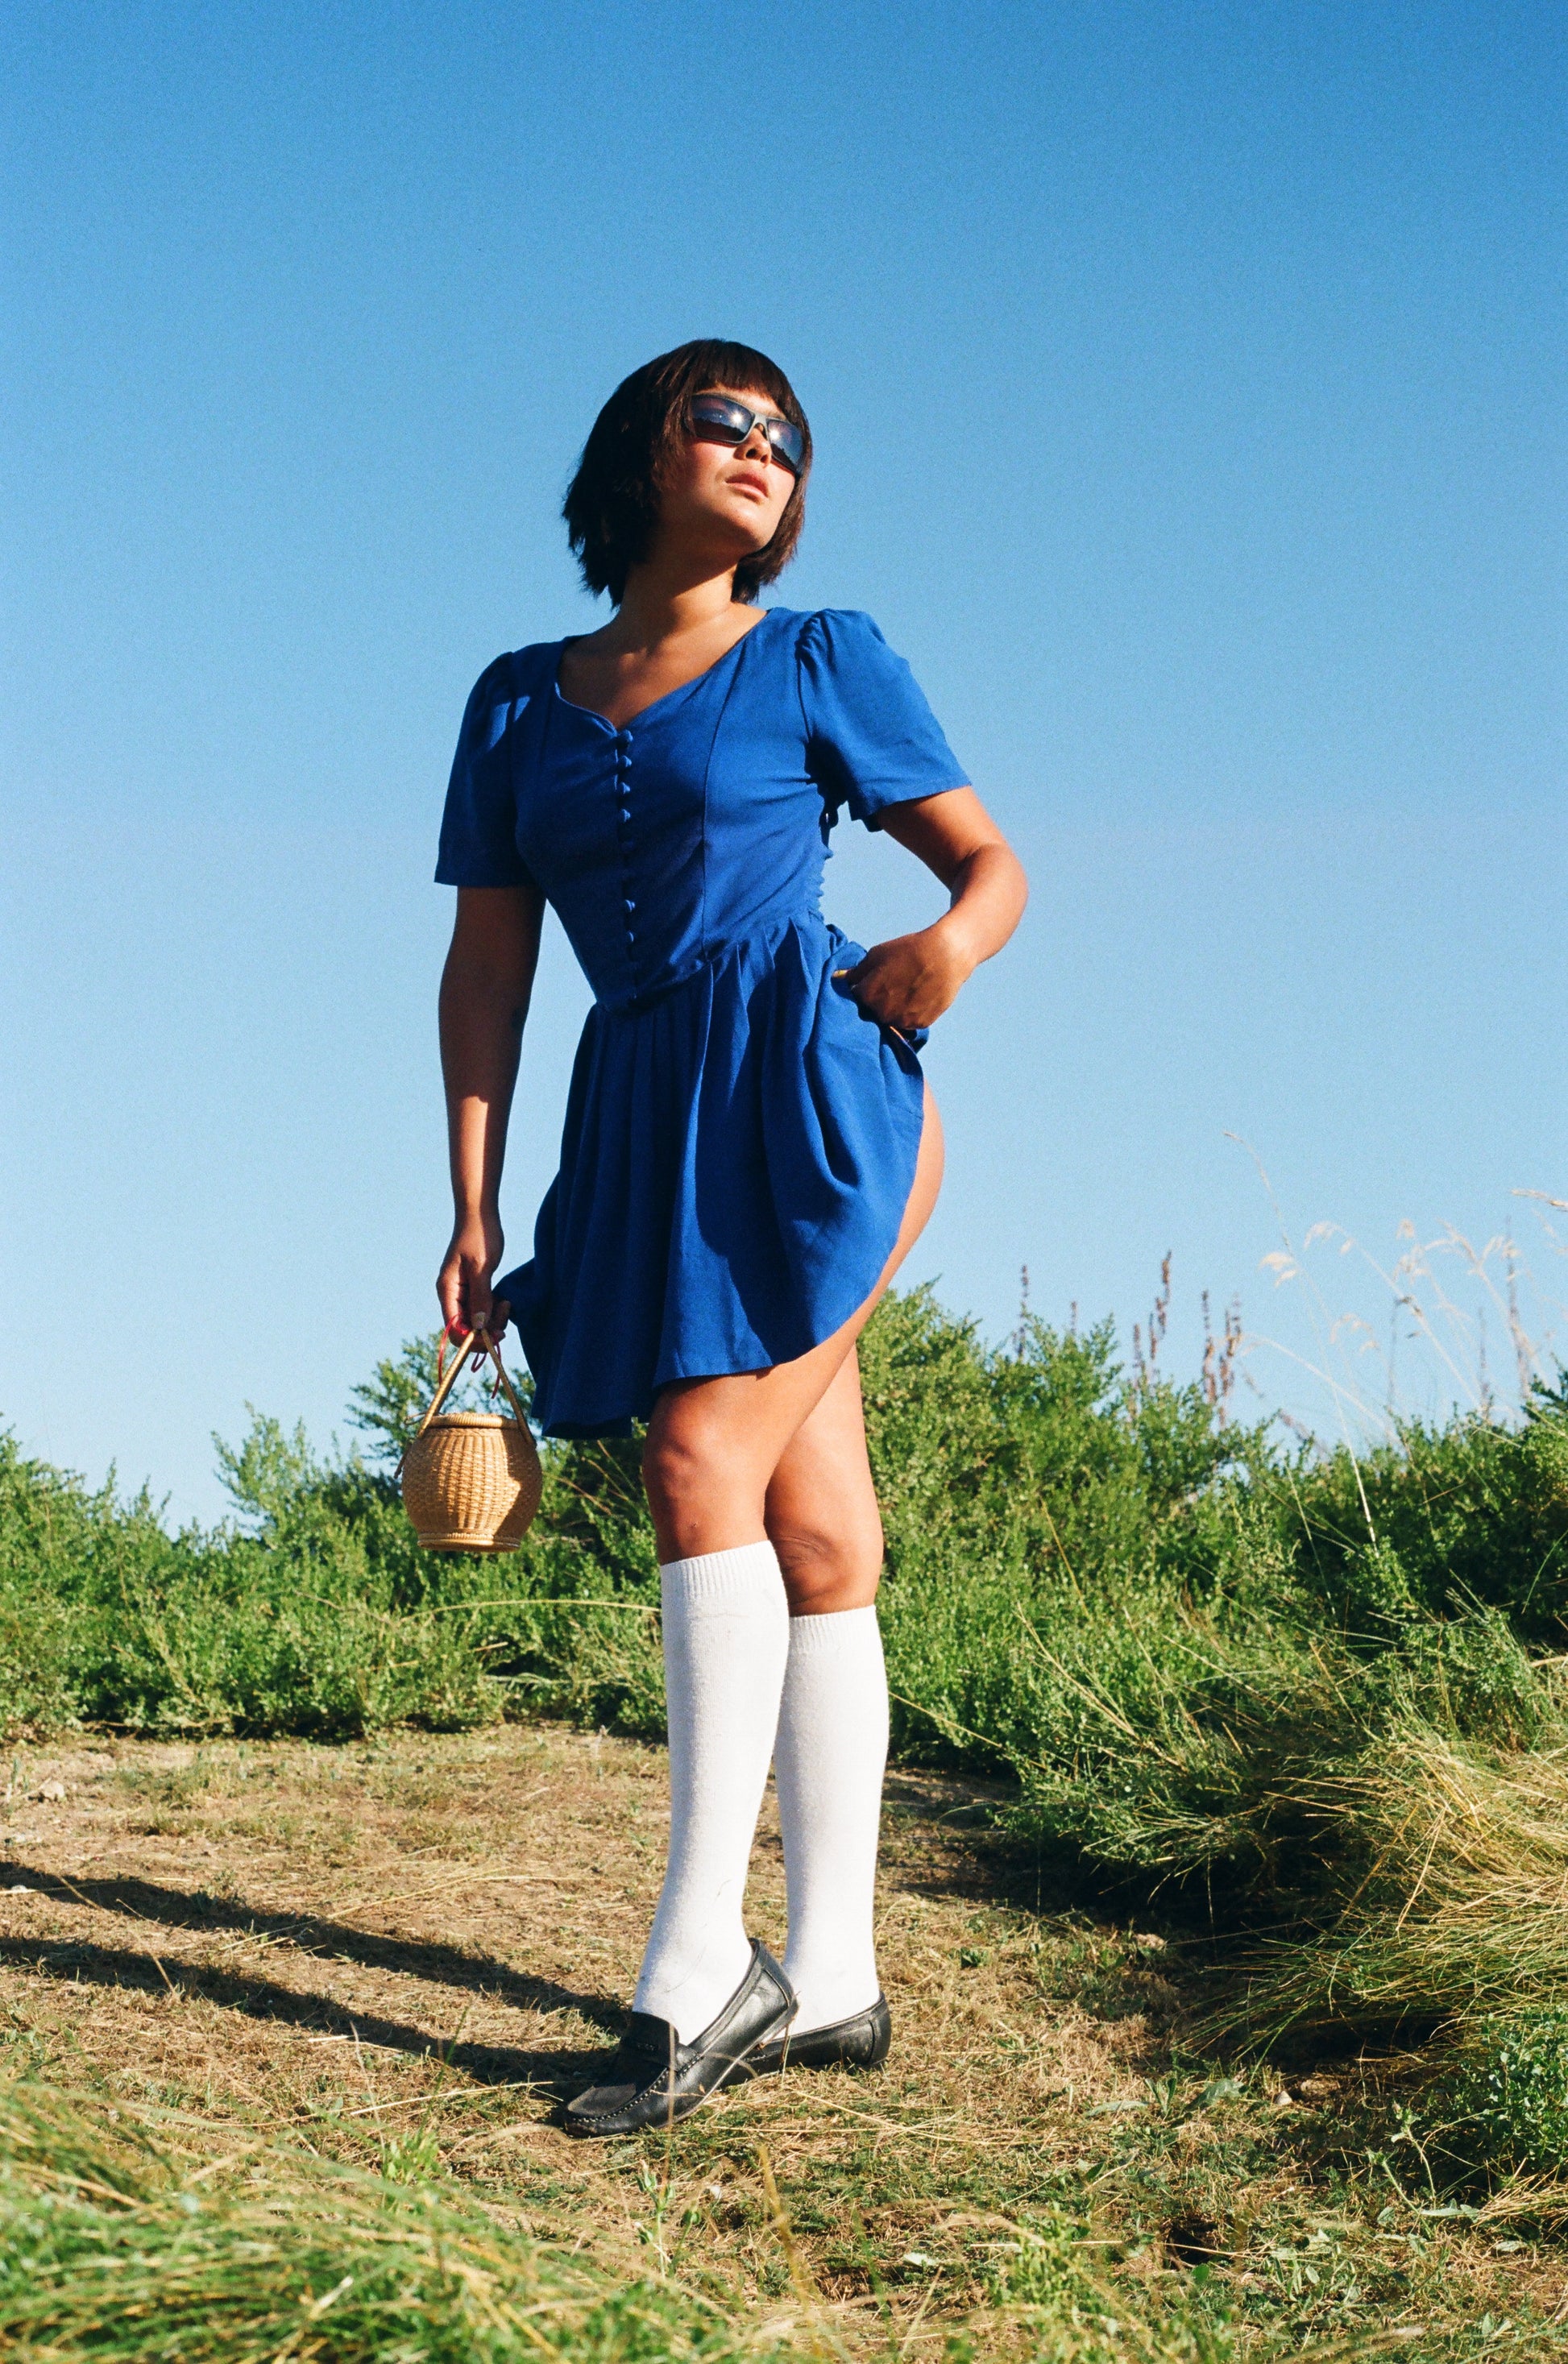 girl wearing blue dress and tall white socks